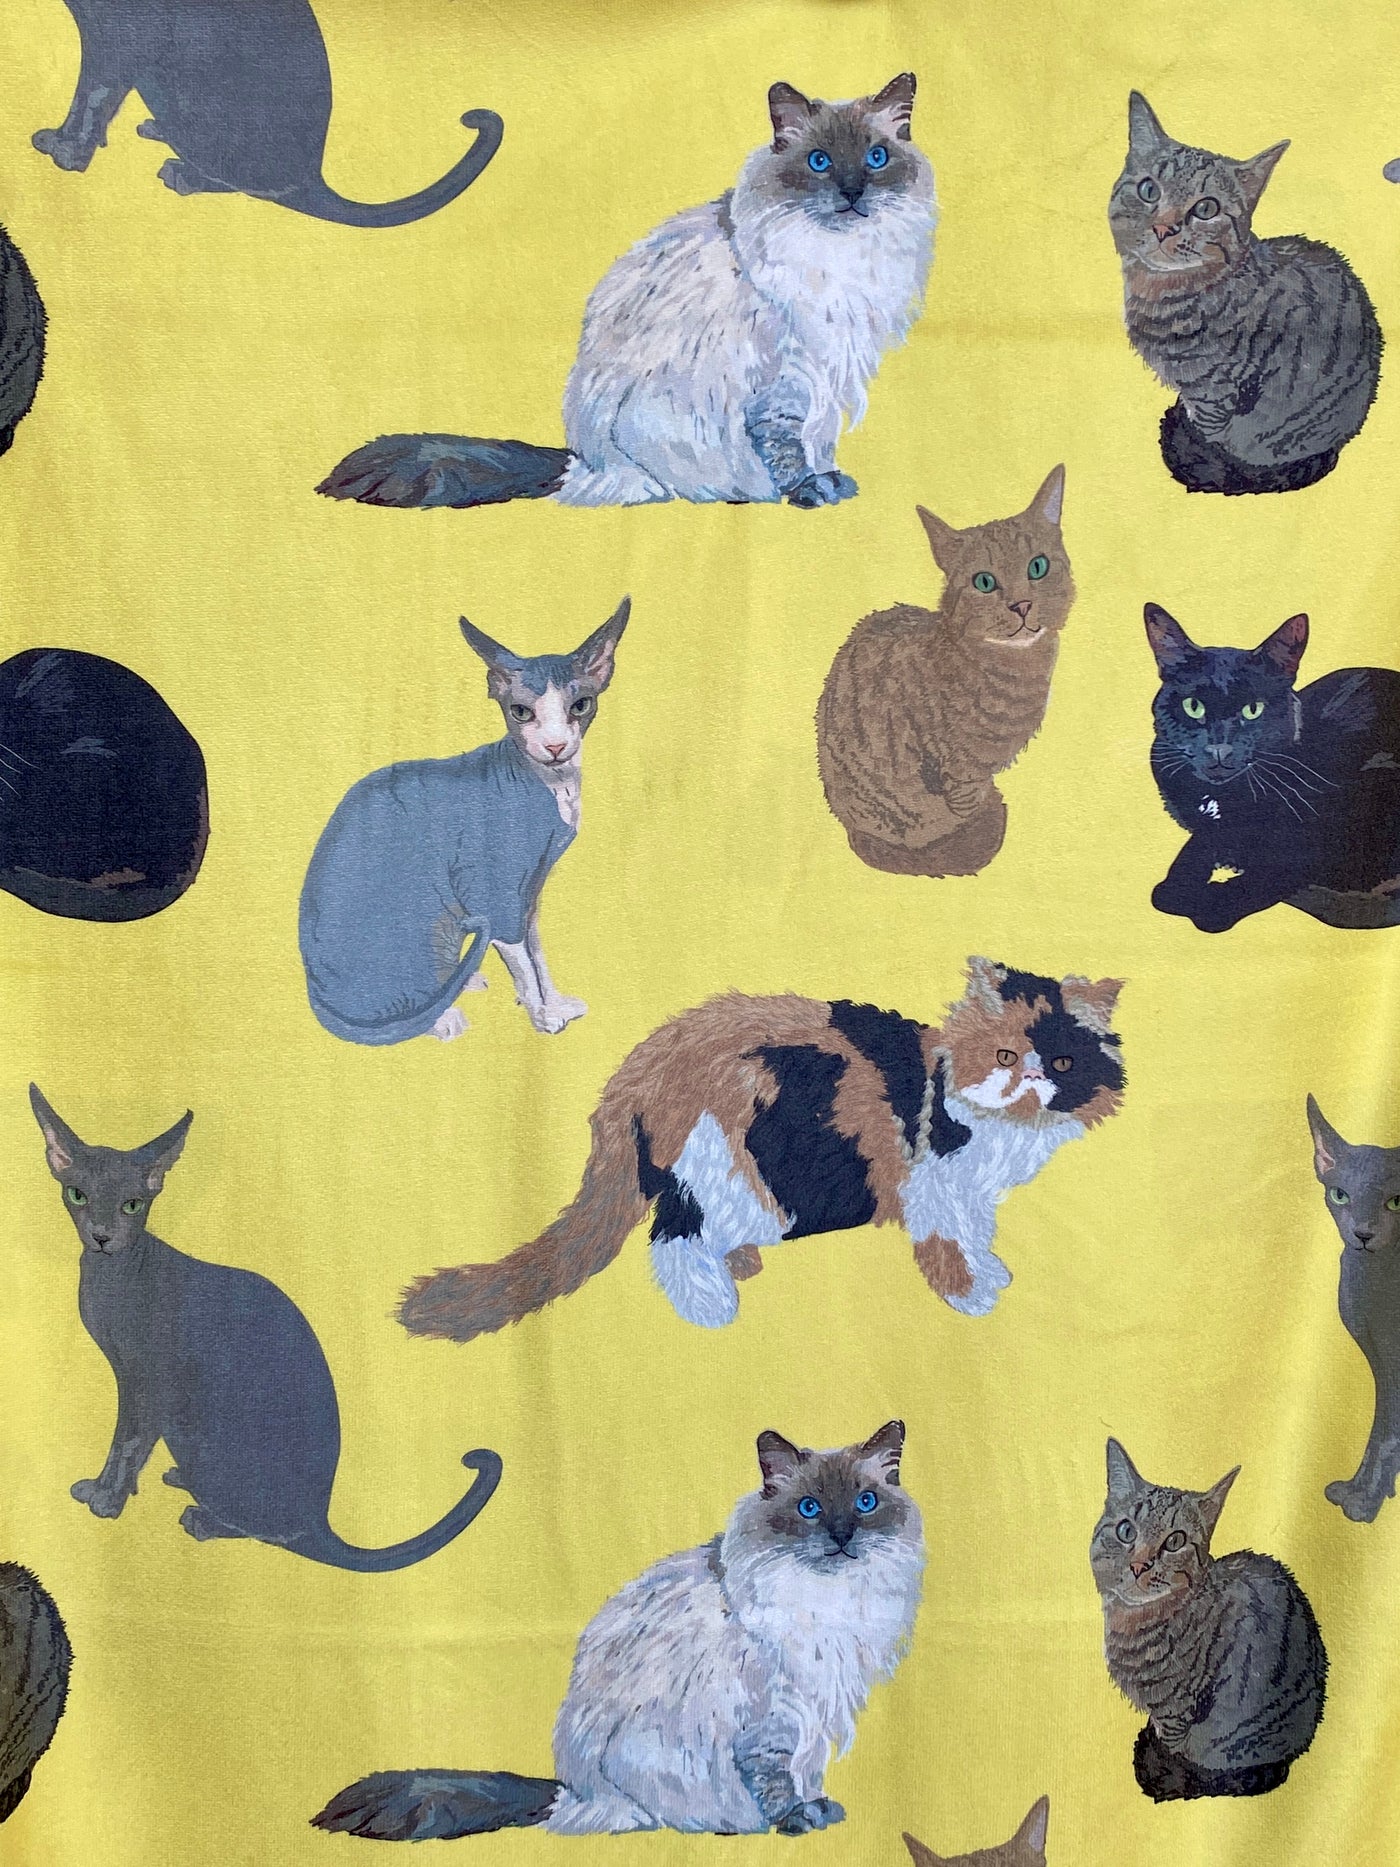 Kid Towel: My Cat Friends (Yellow Background)